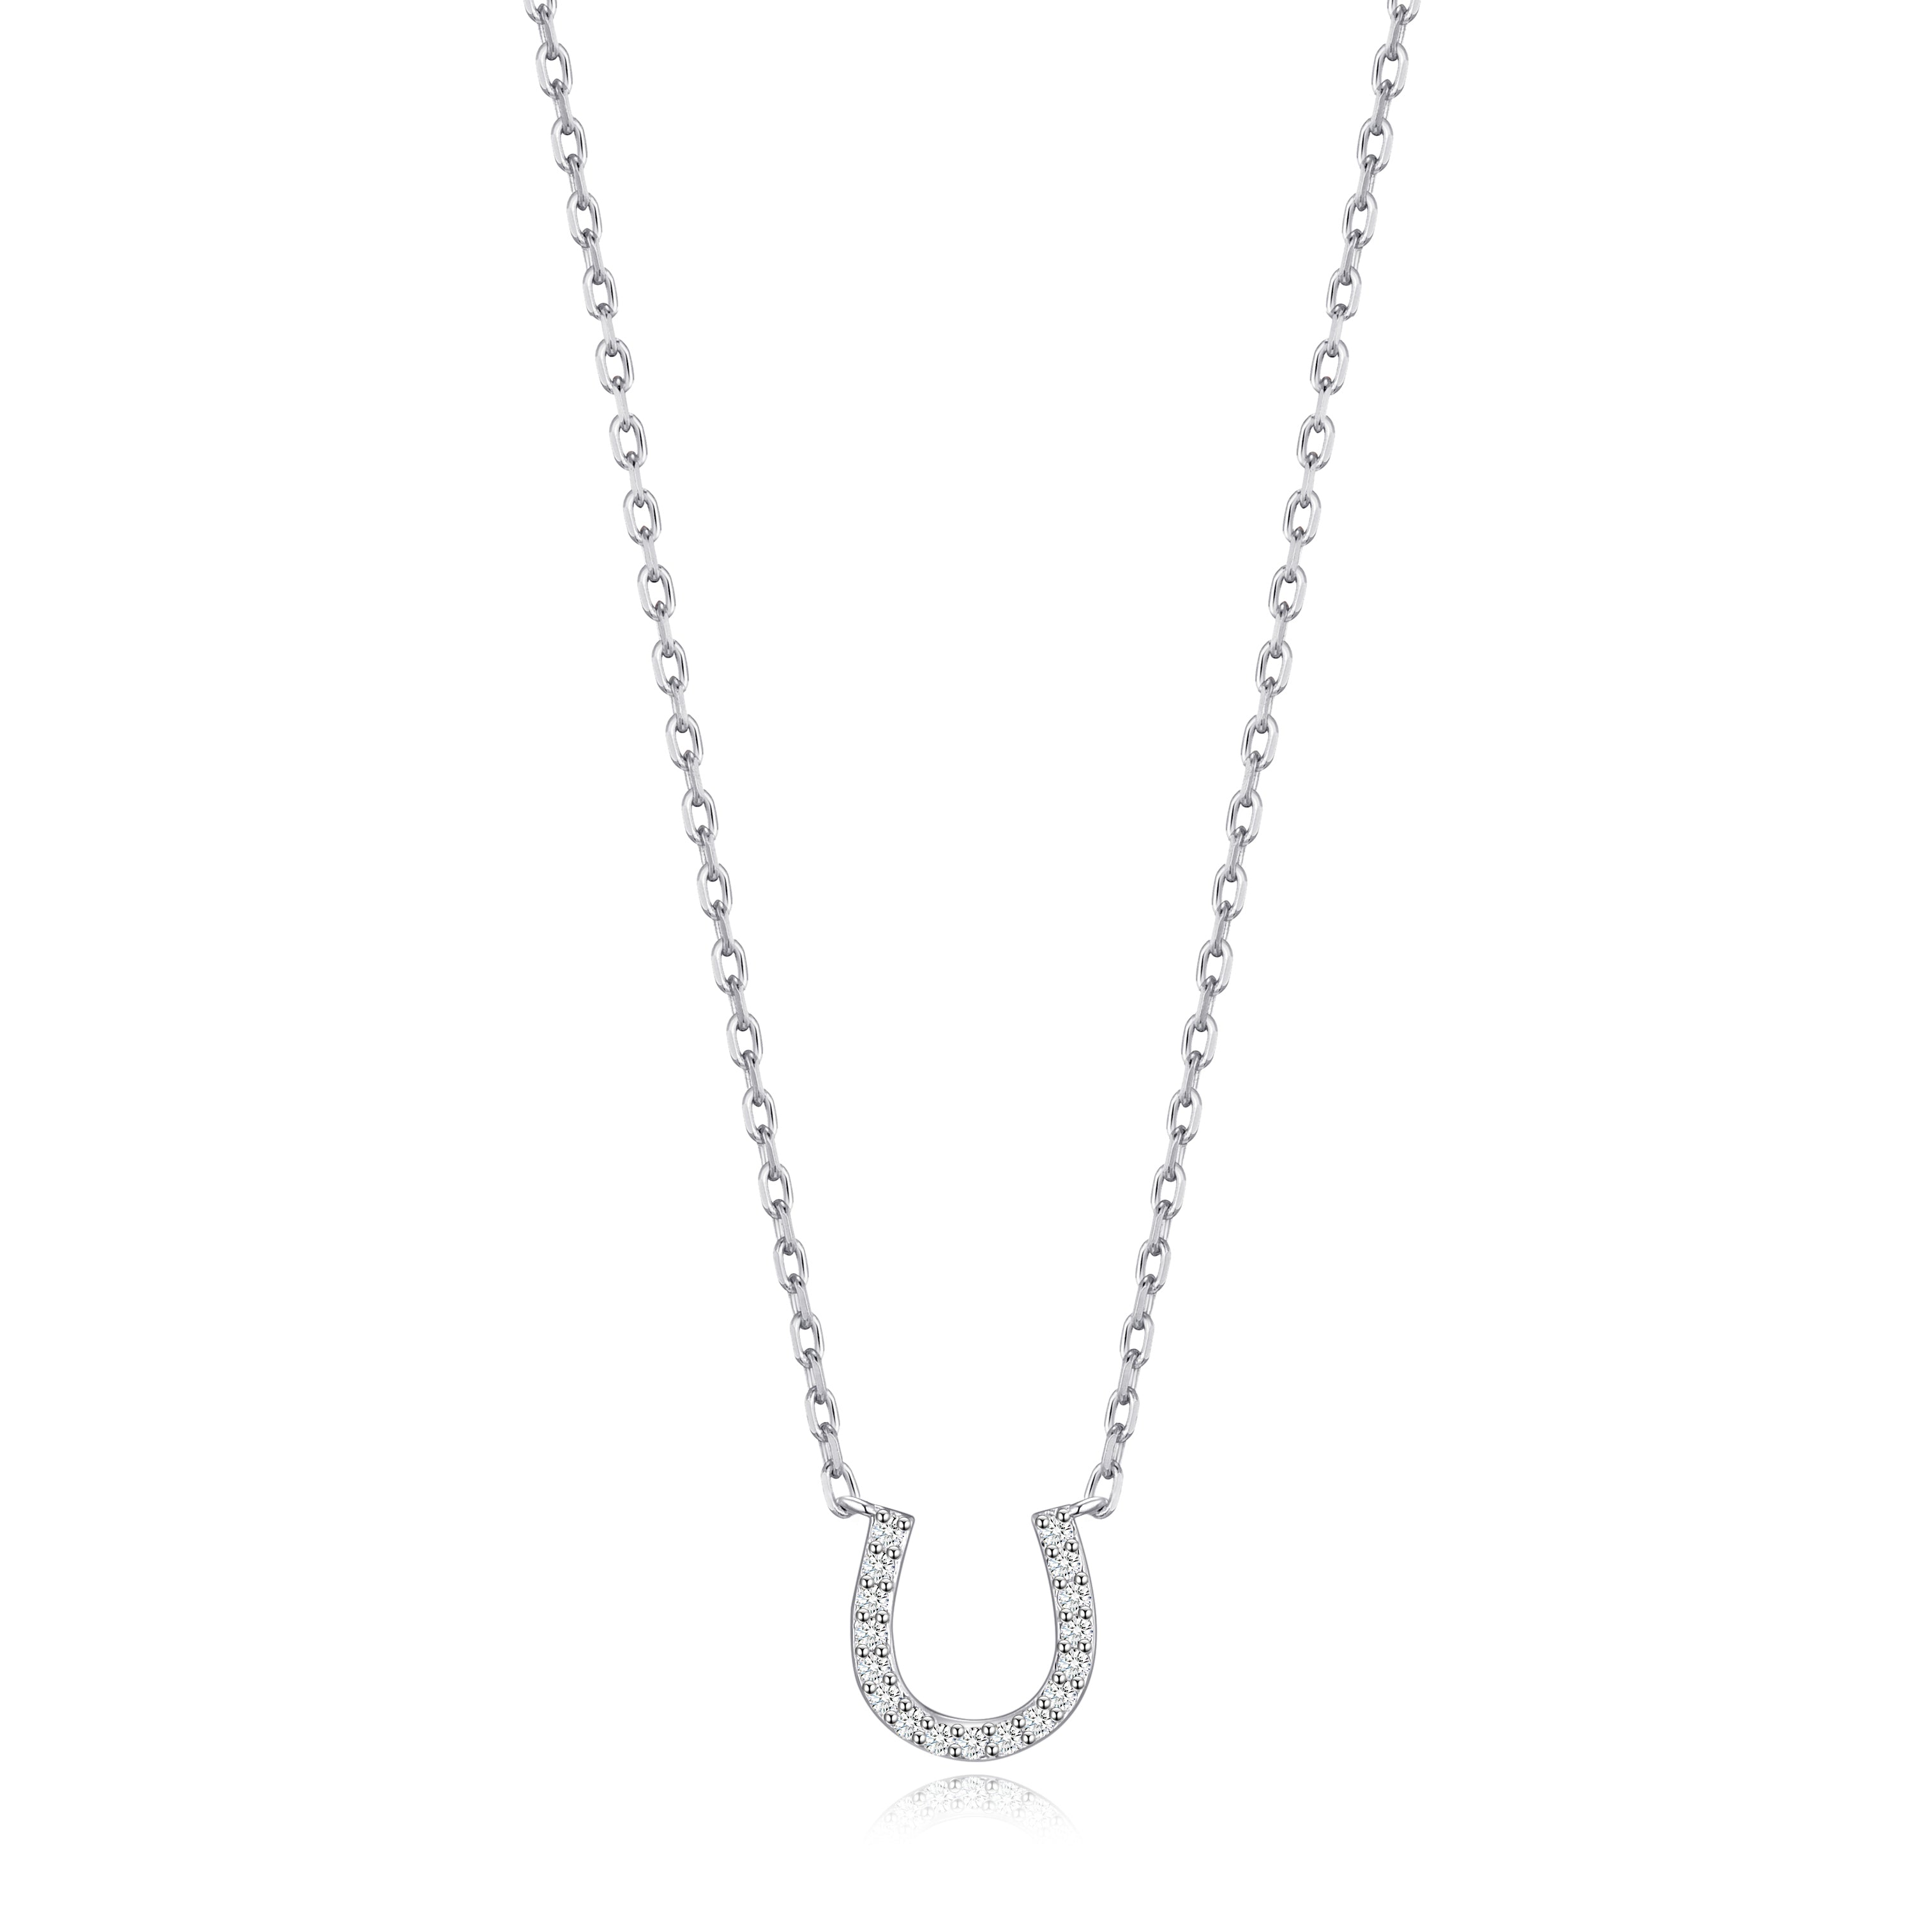 Horseshoe Necklace Created with Zircondia® Crystals